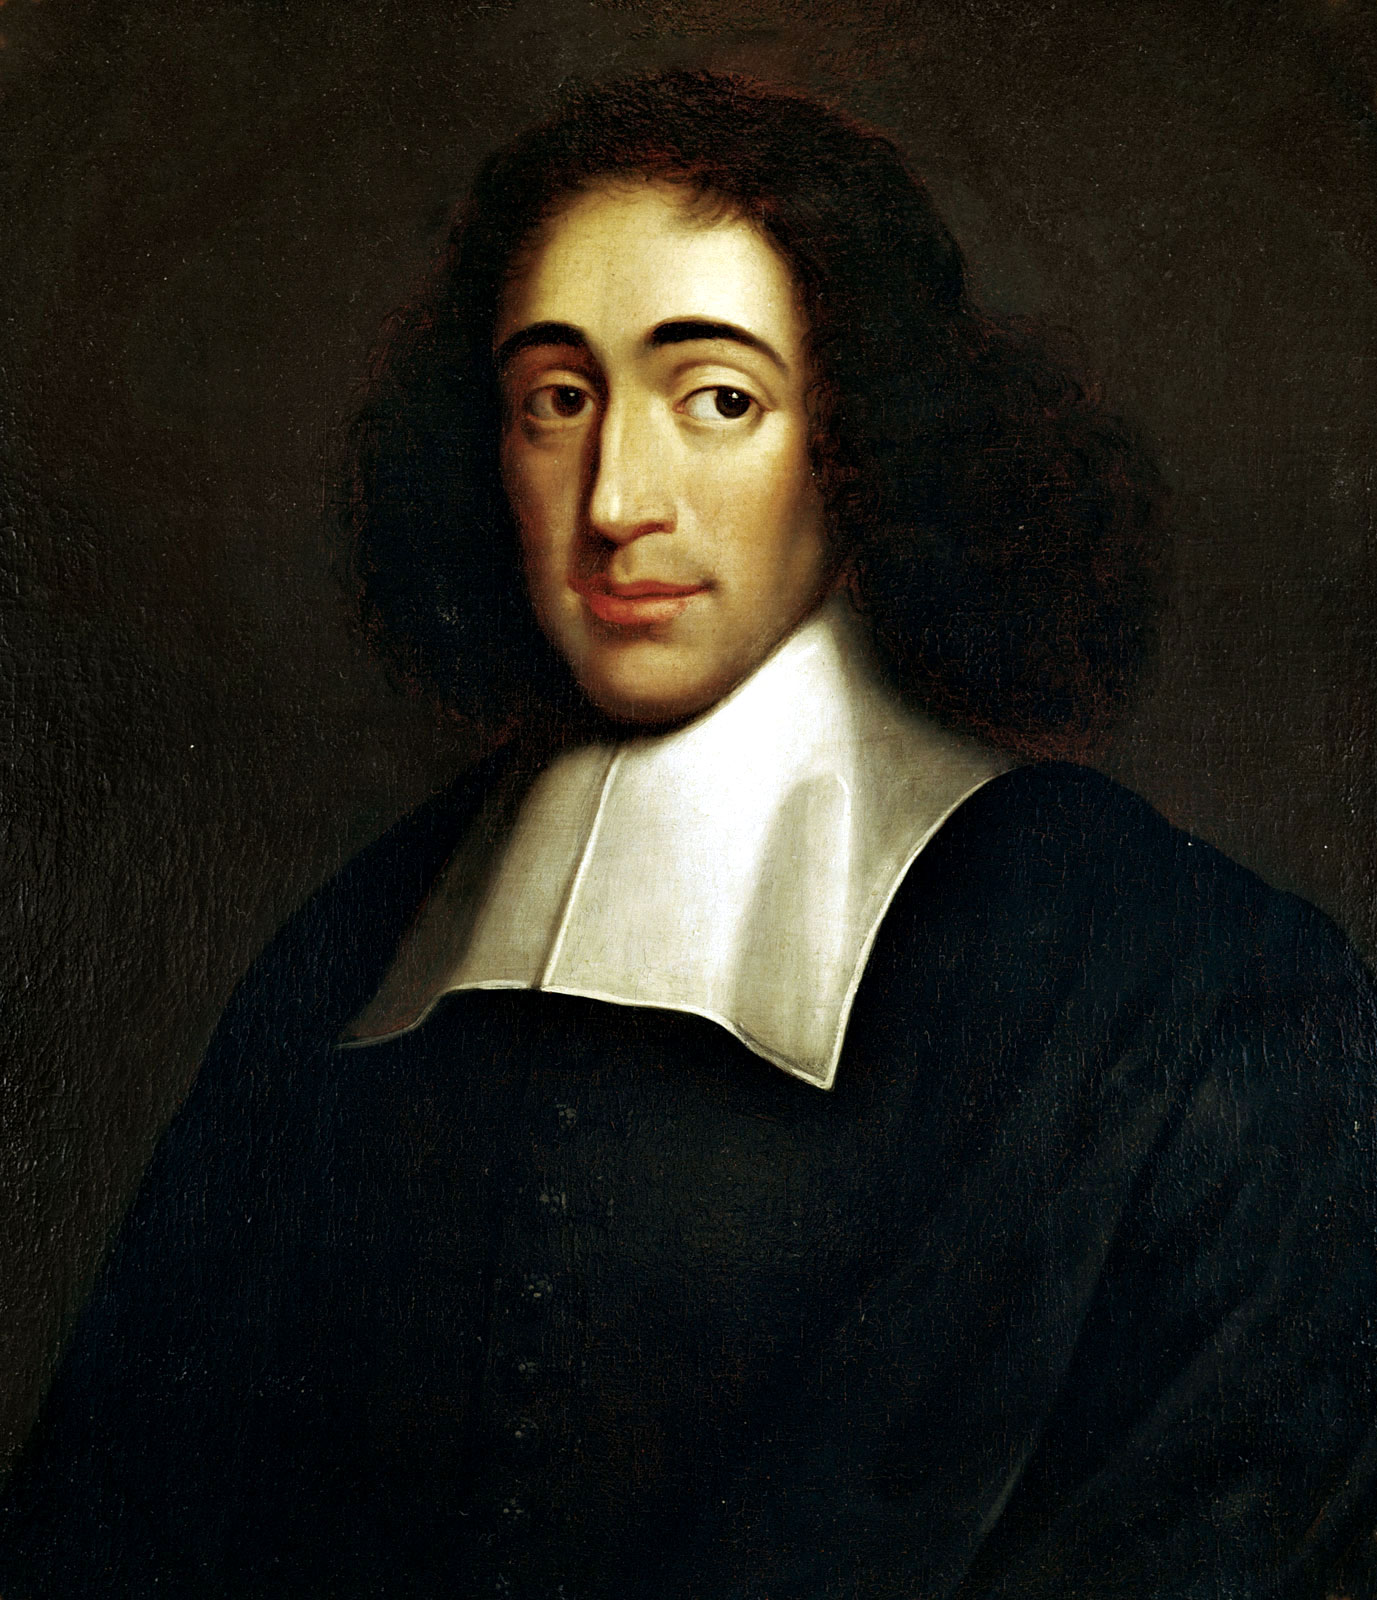 Ficheiro:Spinoza.jpg